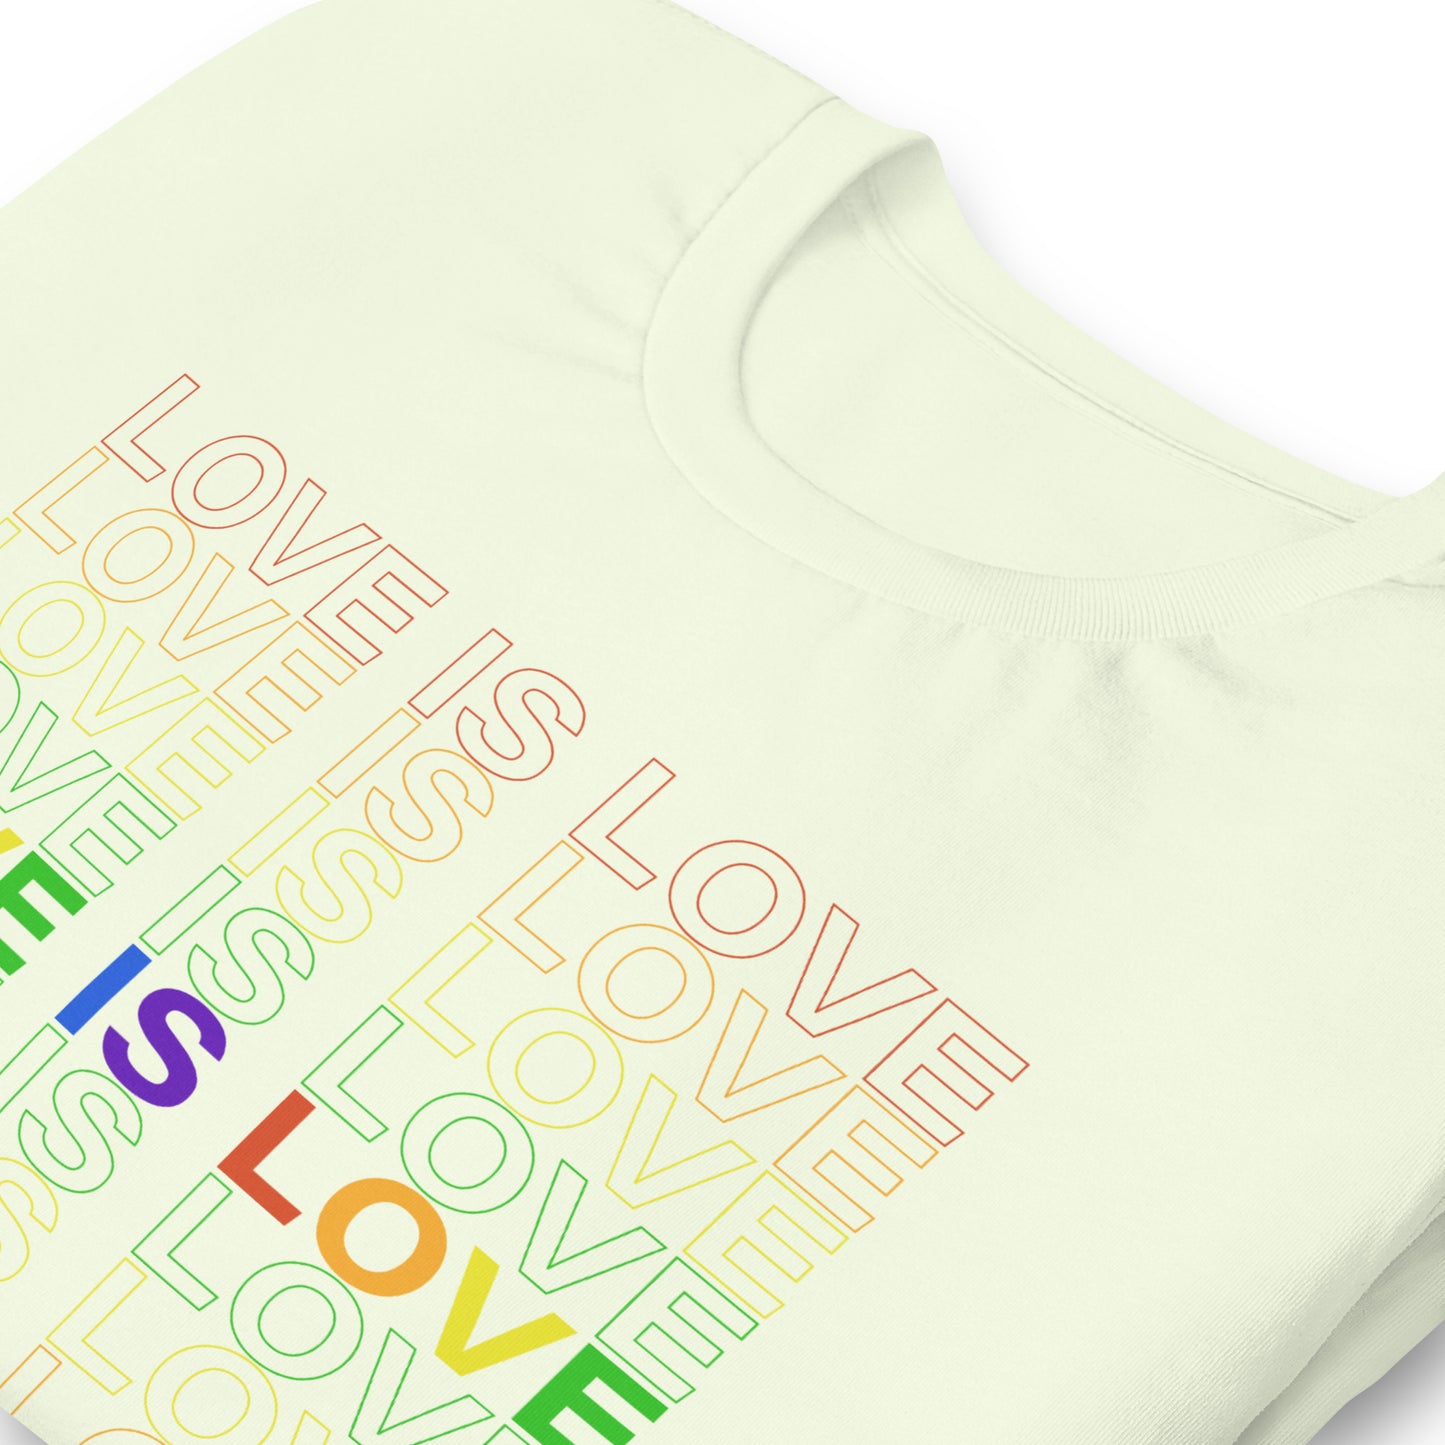 Love is Love Repeated Rainbow Unisex t-shirt